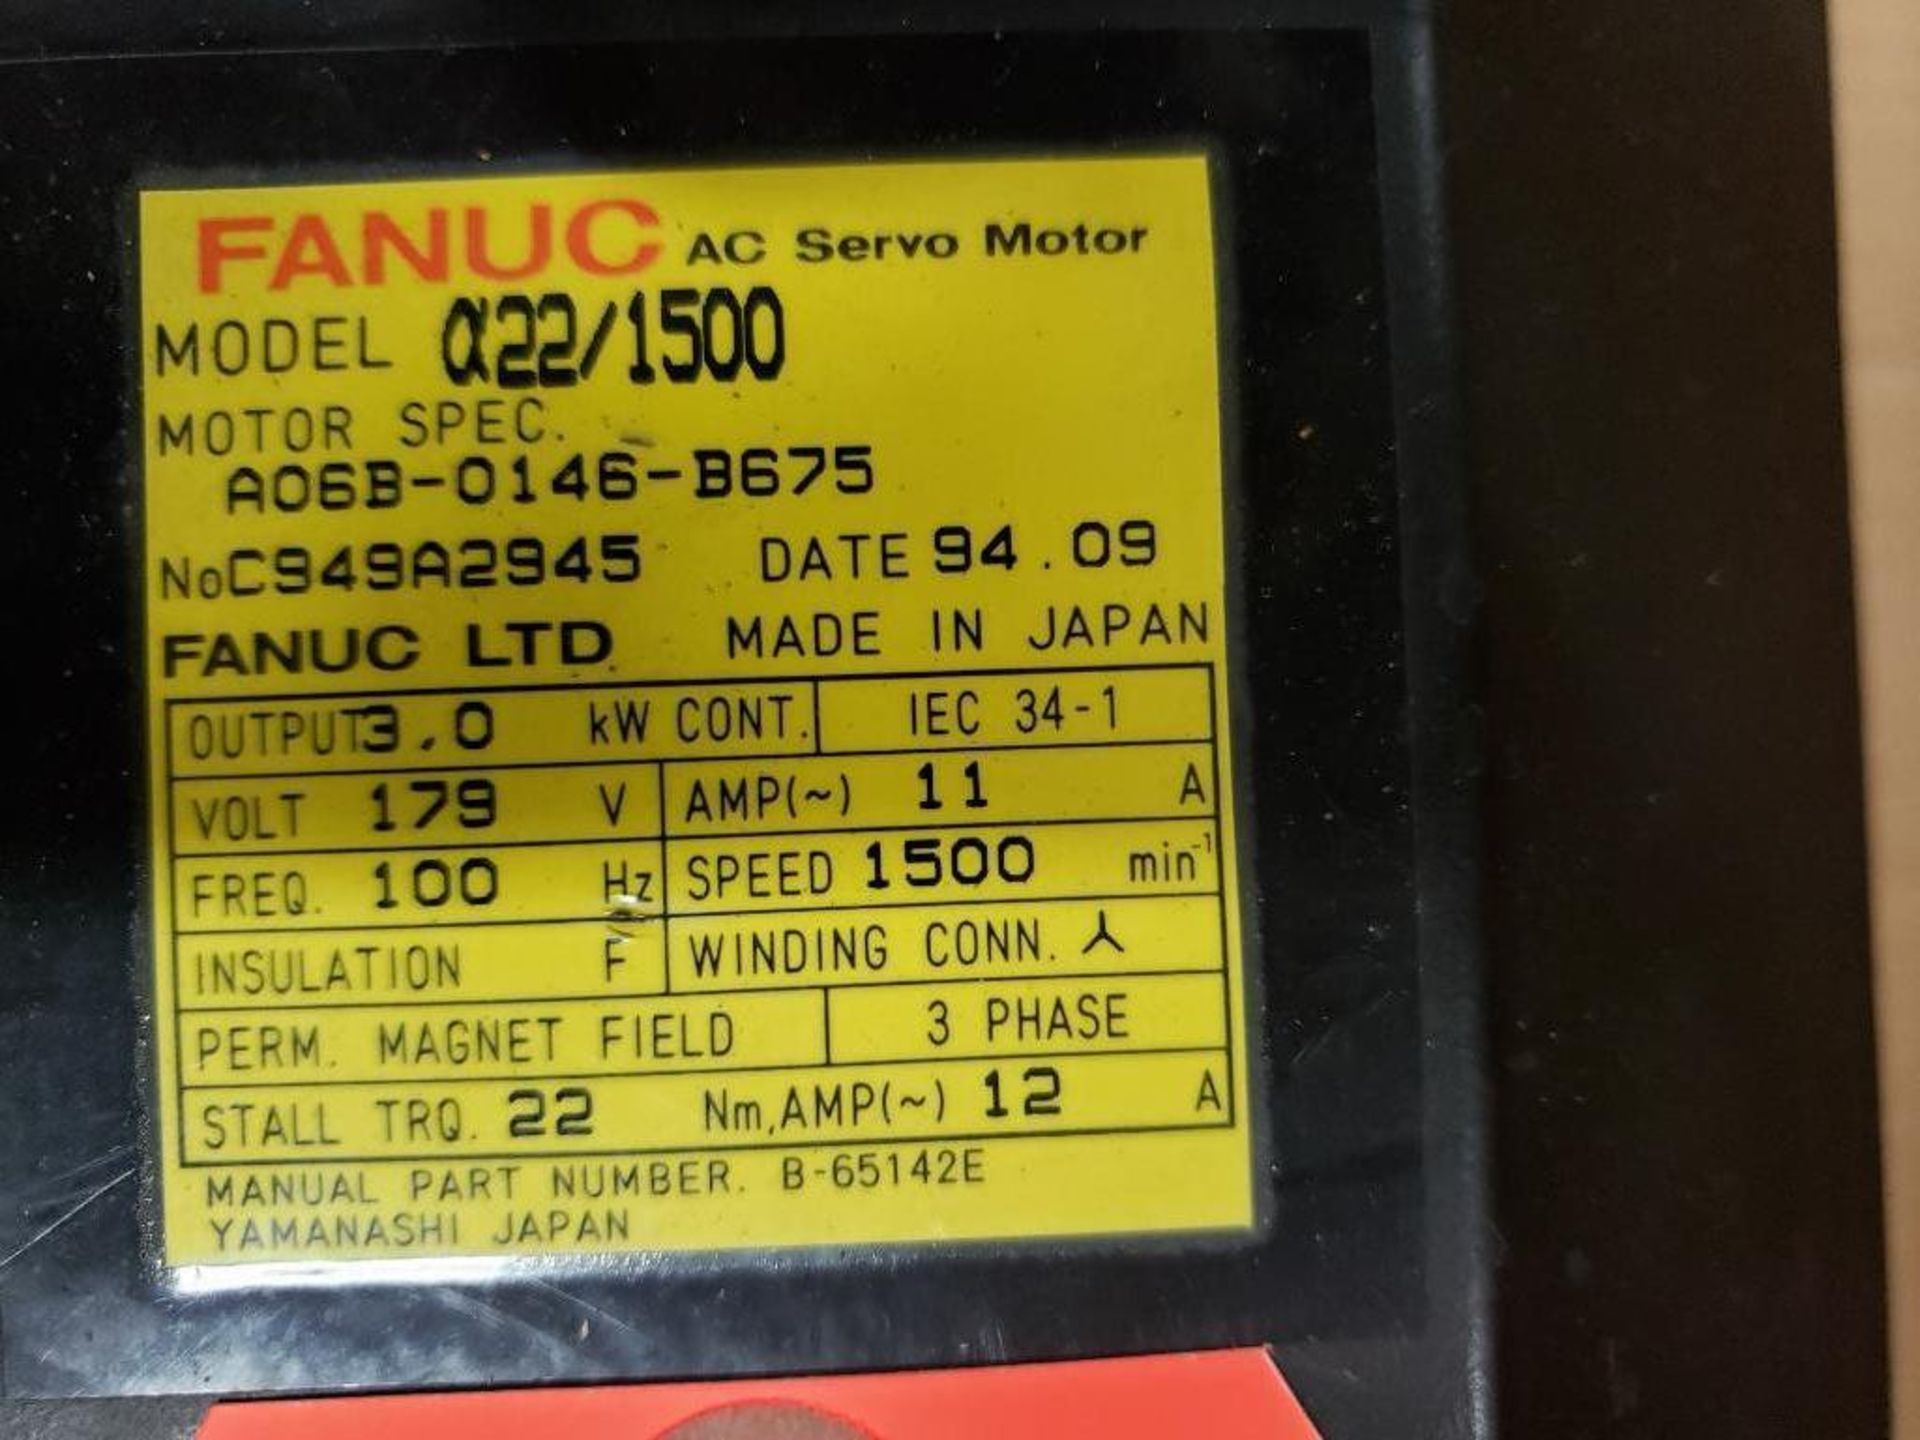 3.0kW GE Fanuc AC Servo Motor A06B-0146-B675. 179V, 1500RPM, 3PH. - Image 2 of 6